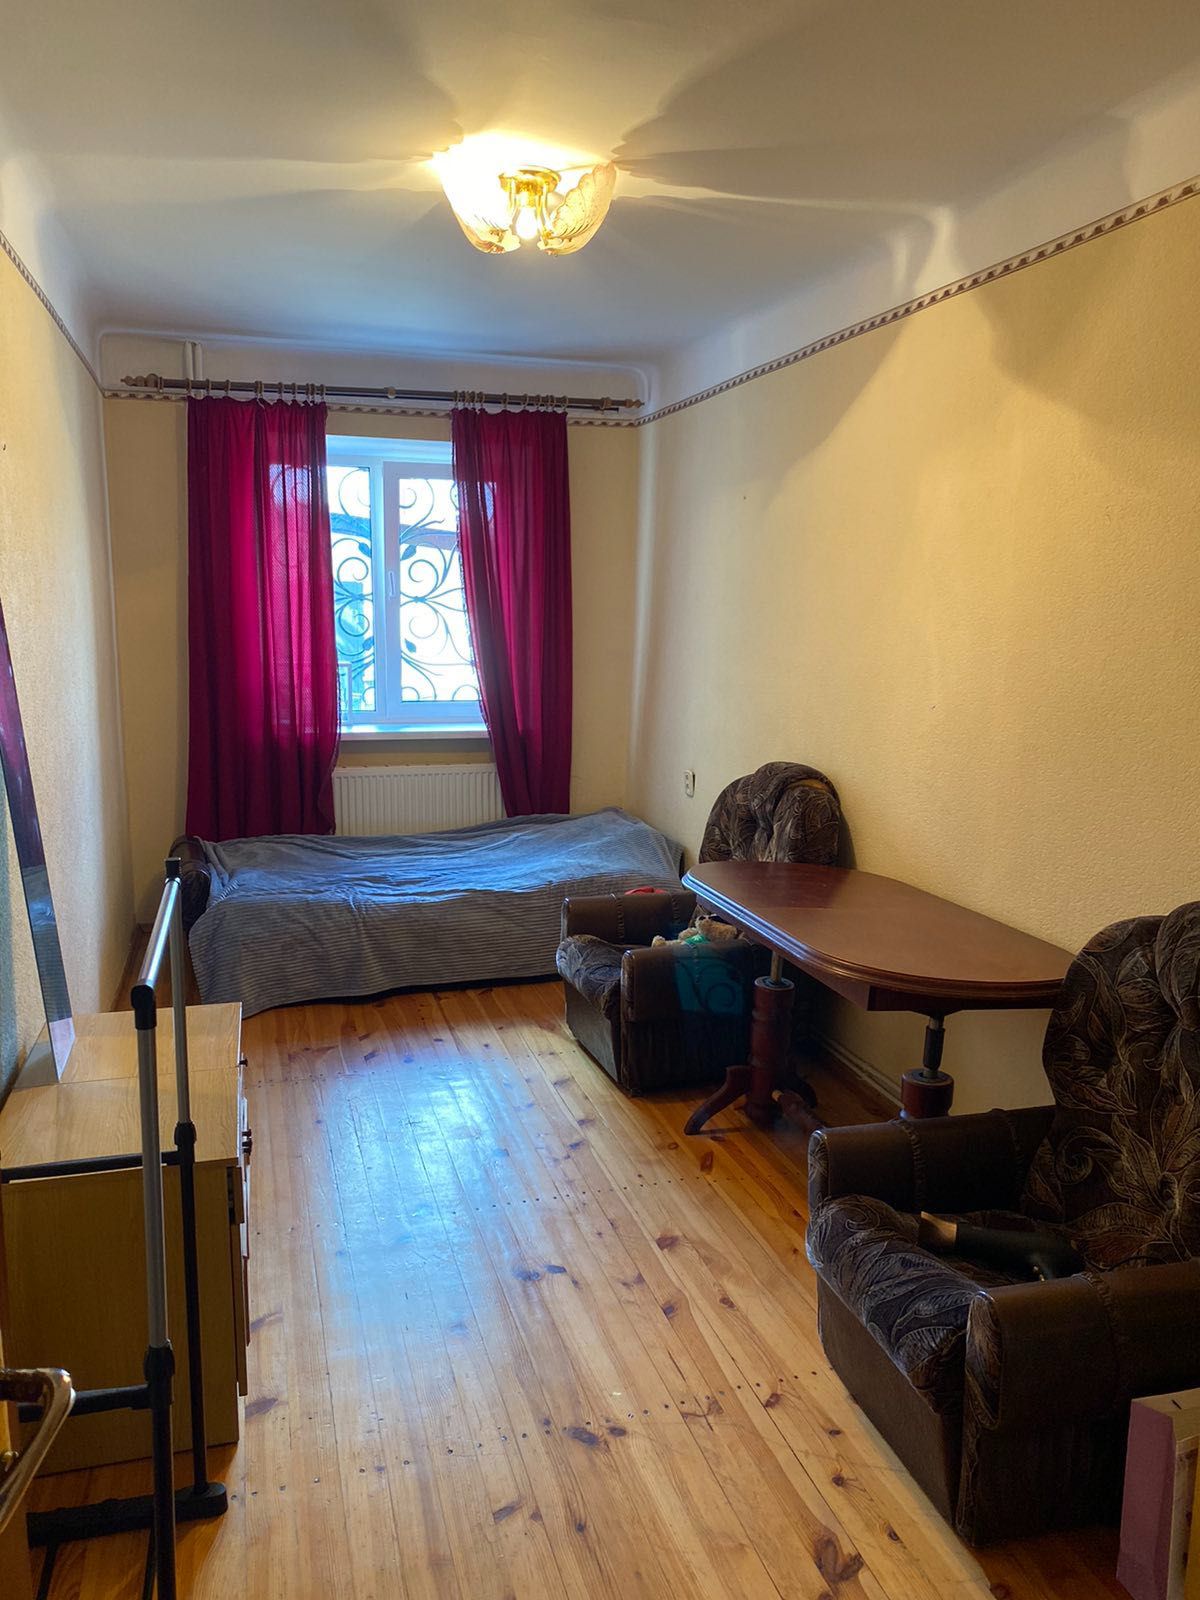 ПРОДАЖ! 3-кімнатна квартира на Петра Могили | Автономне опалення